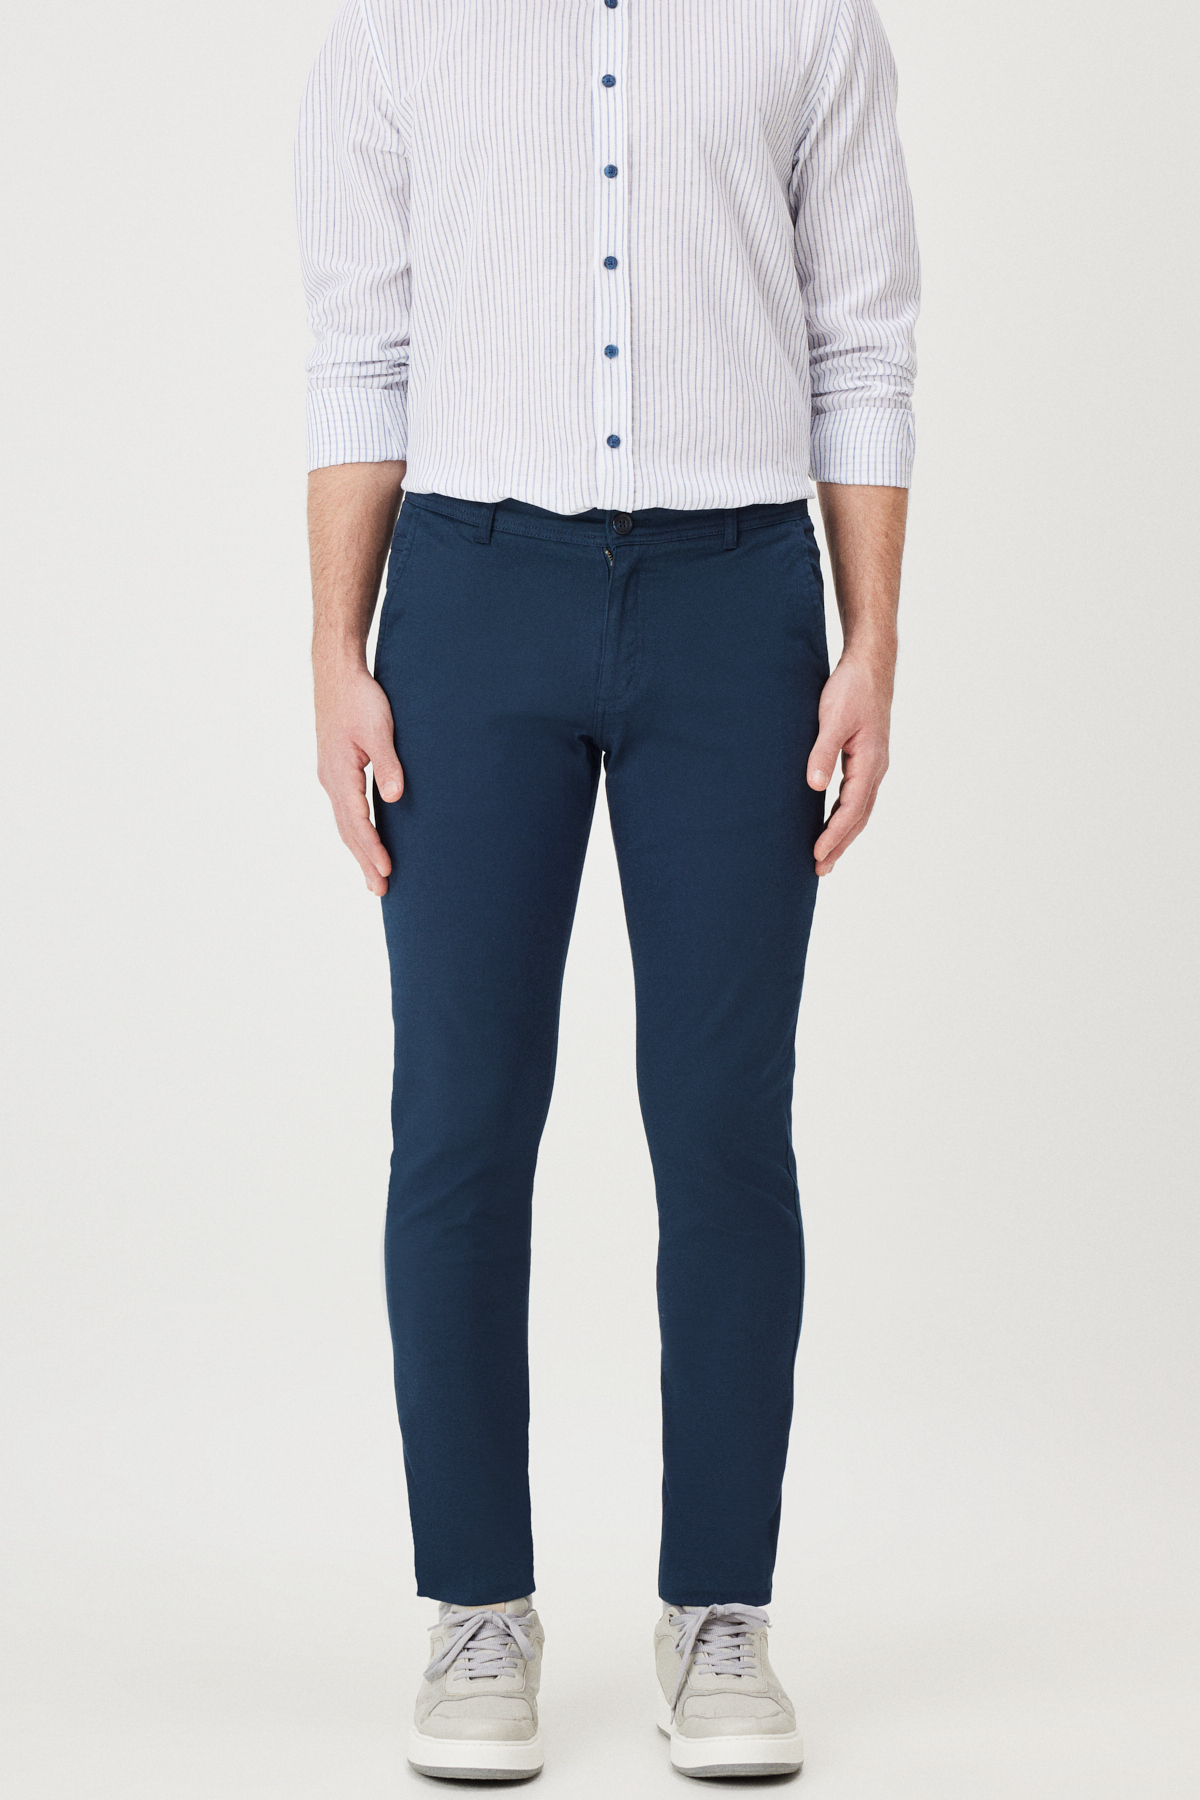 Levně AC&Co / Altınyıldız Classics Men's Navy Blue Canvas Slim Fit Slim Fit Fitted Side Pockets Flexible Chino Trousers.